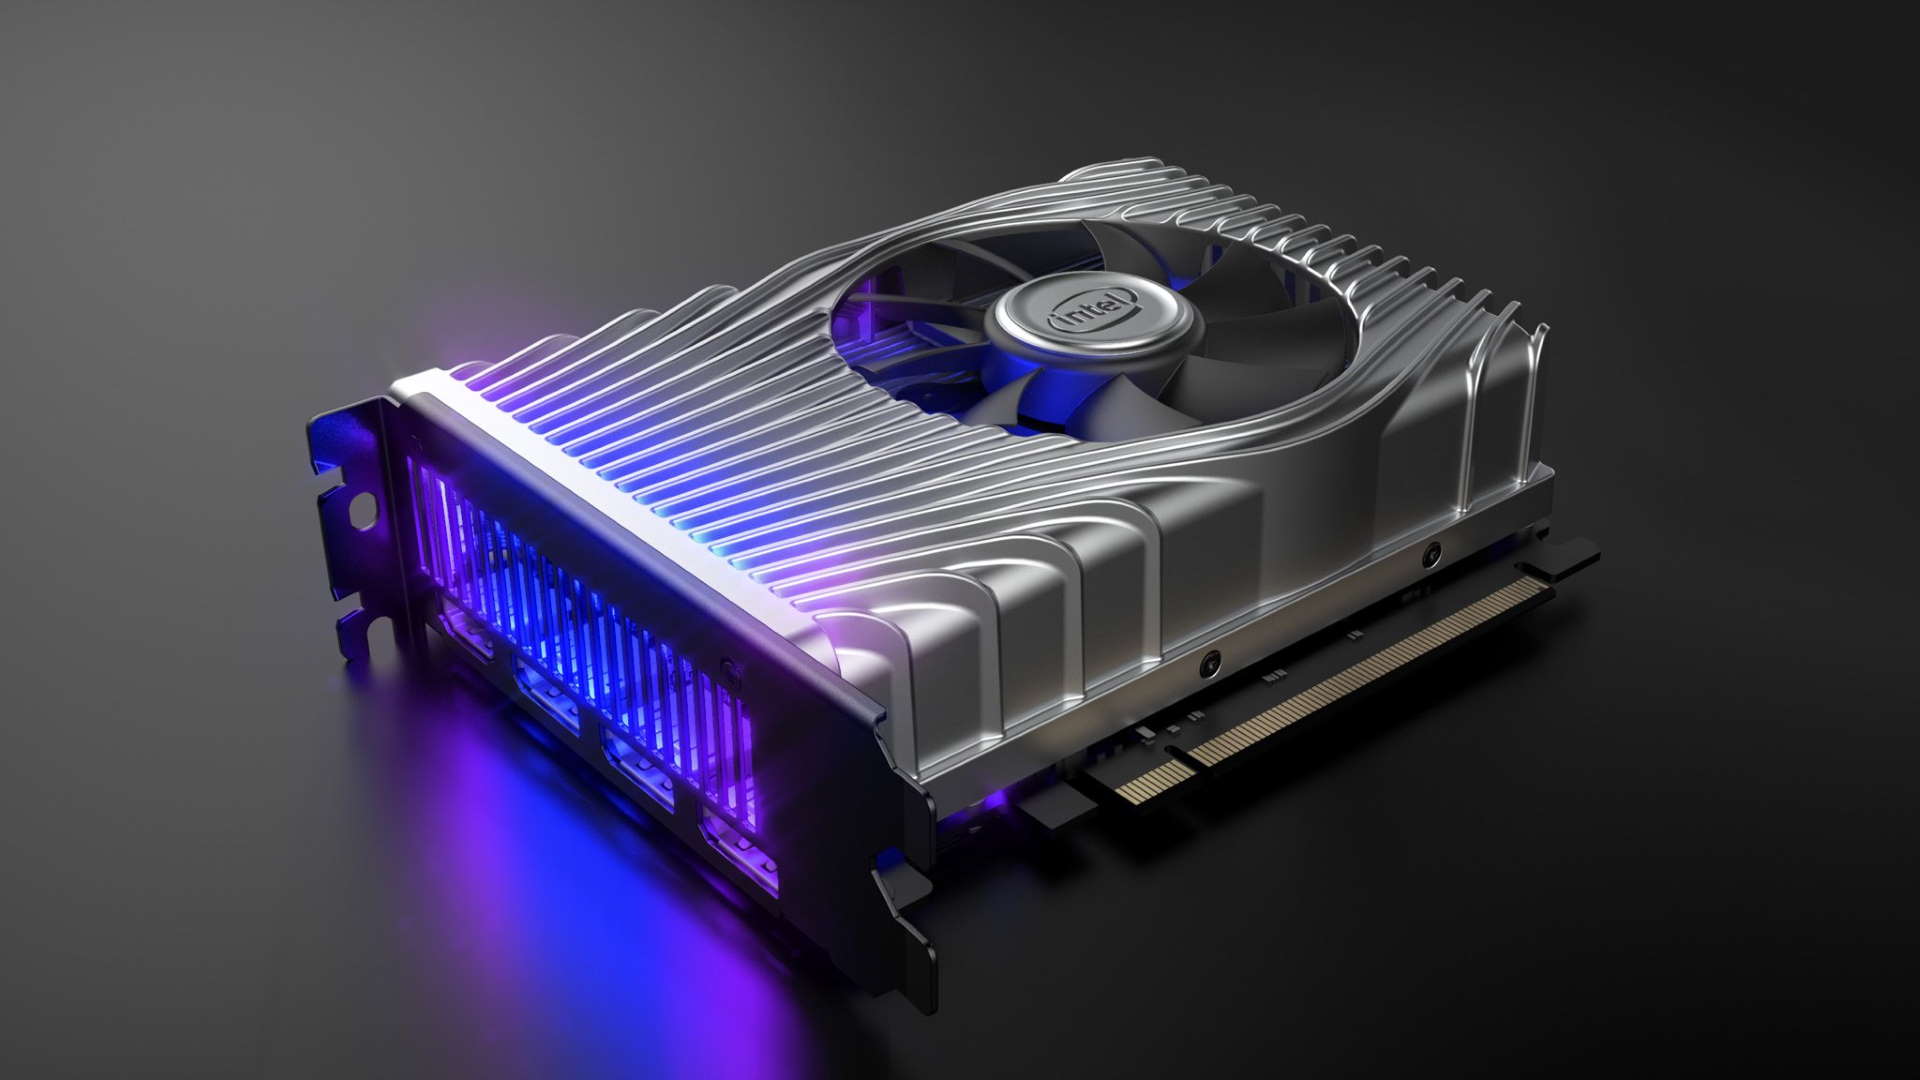 Intel DG1 GPU beats AMD’s RX 550, while the DG2 targets Nvidia’s RTX 3070